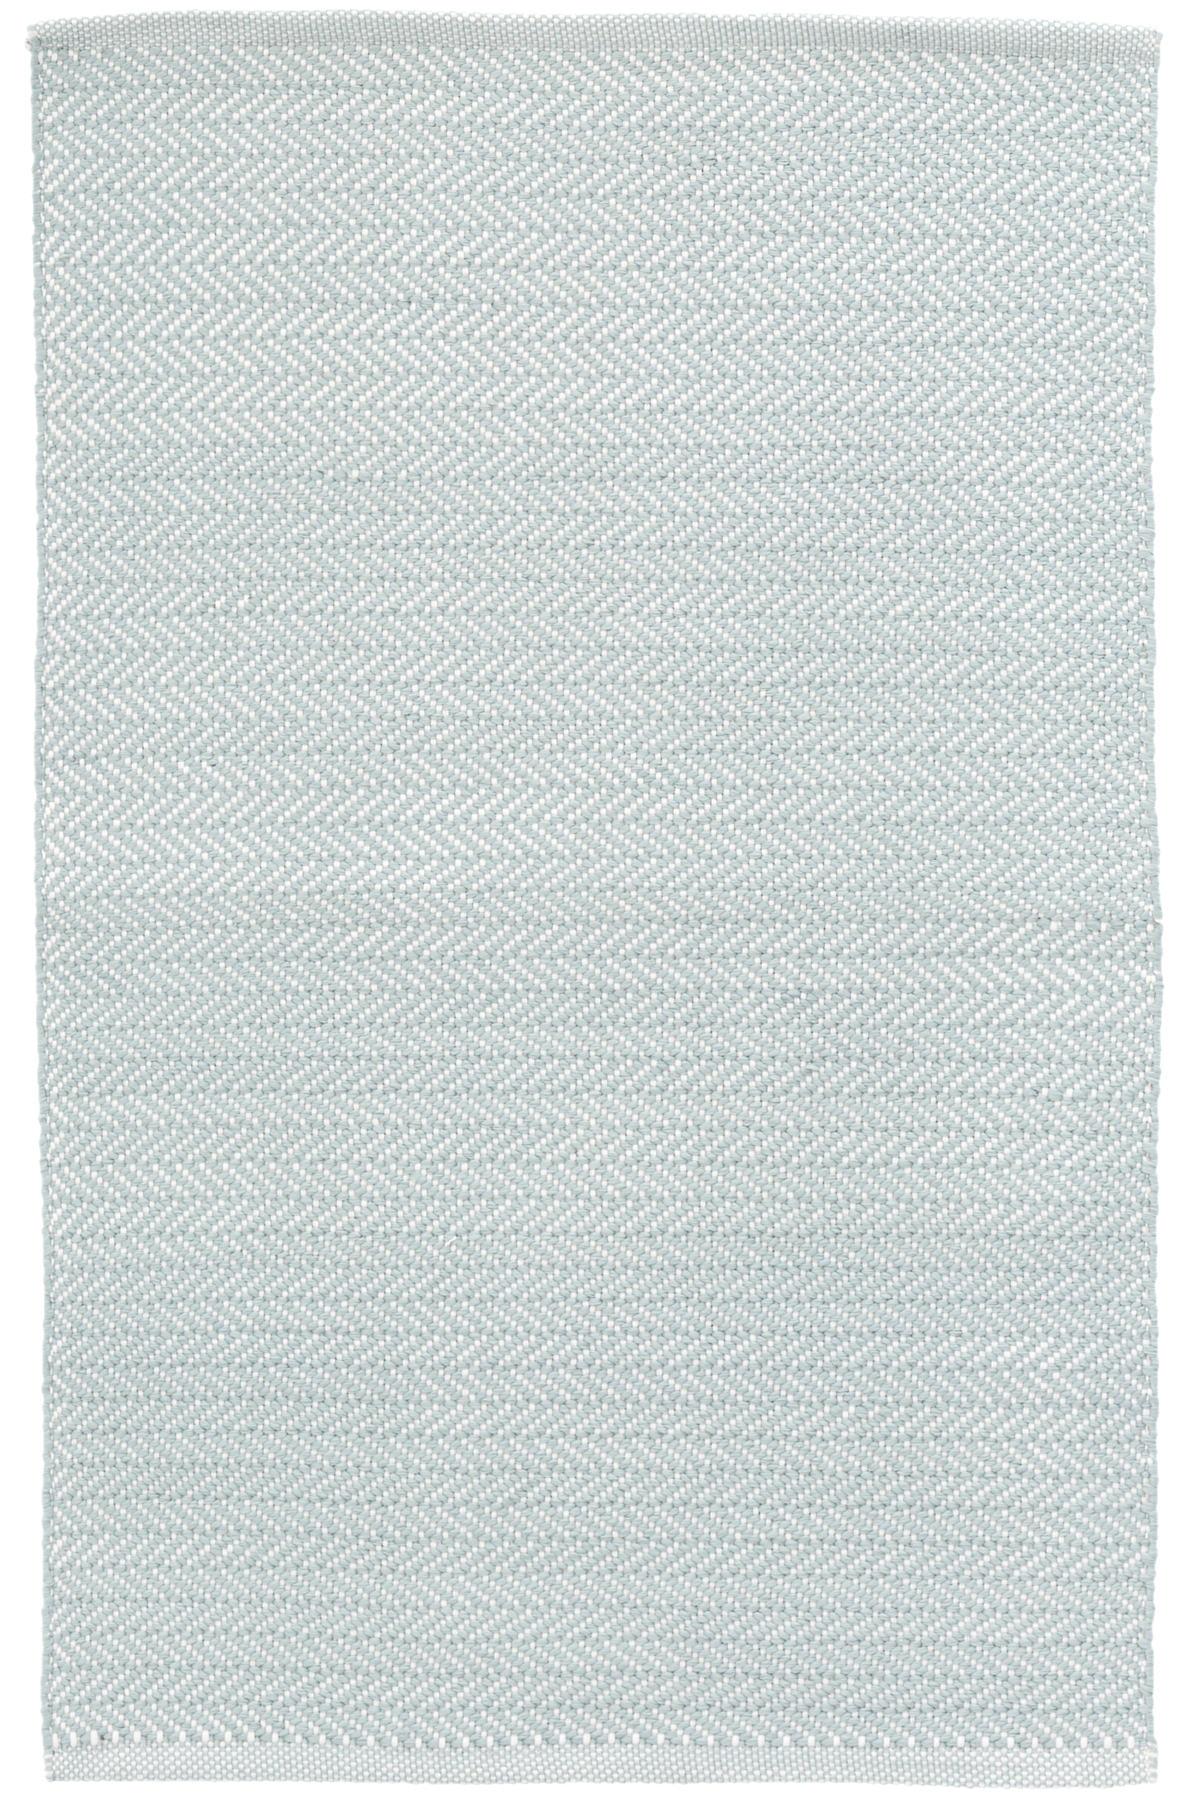 light blue rug amazon